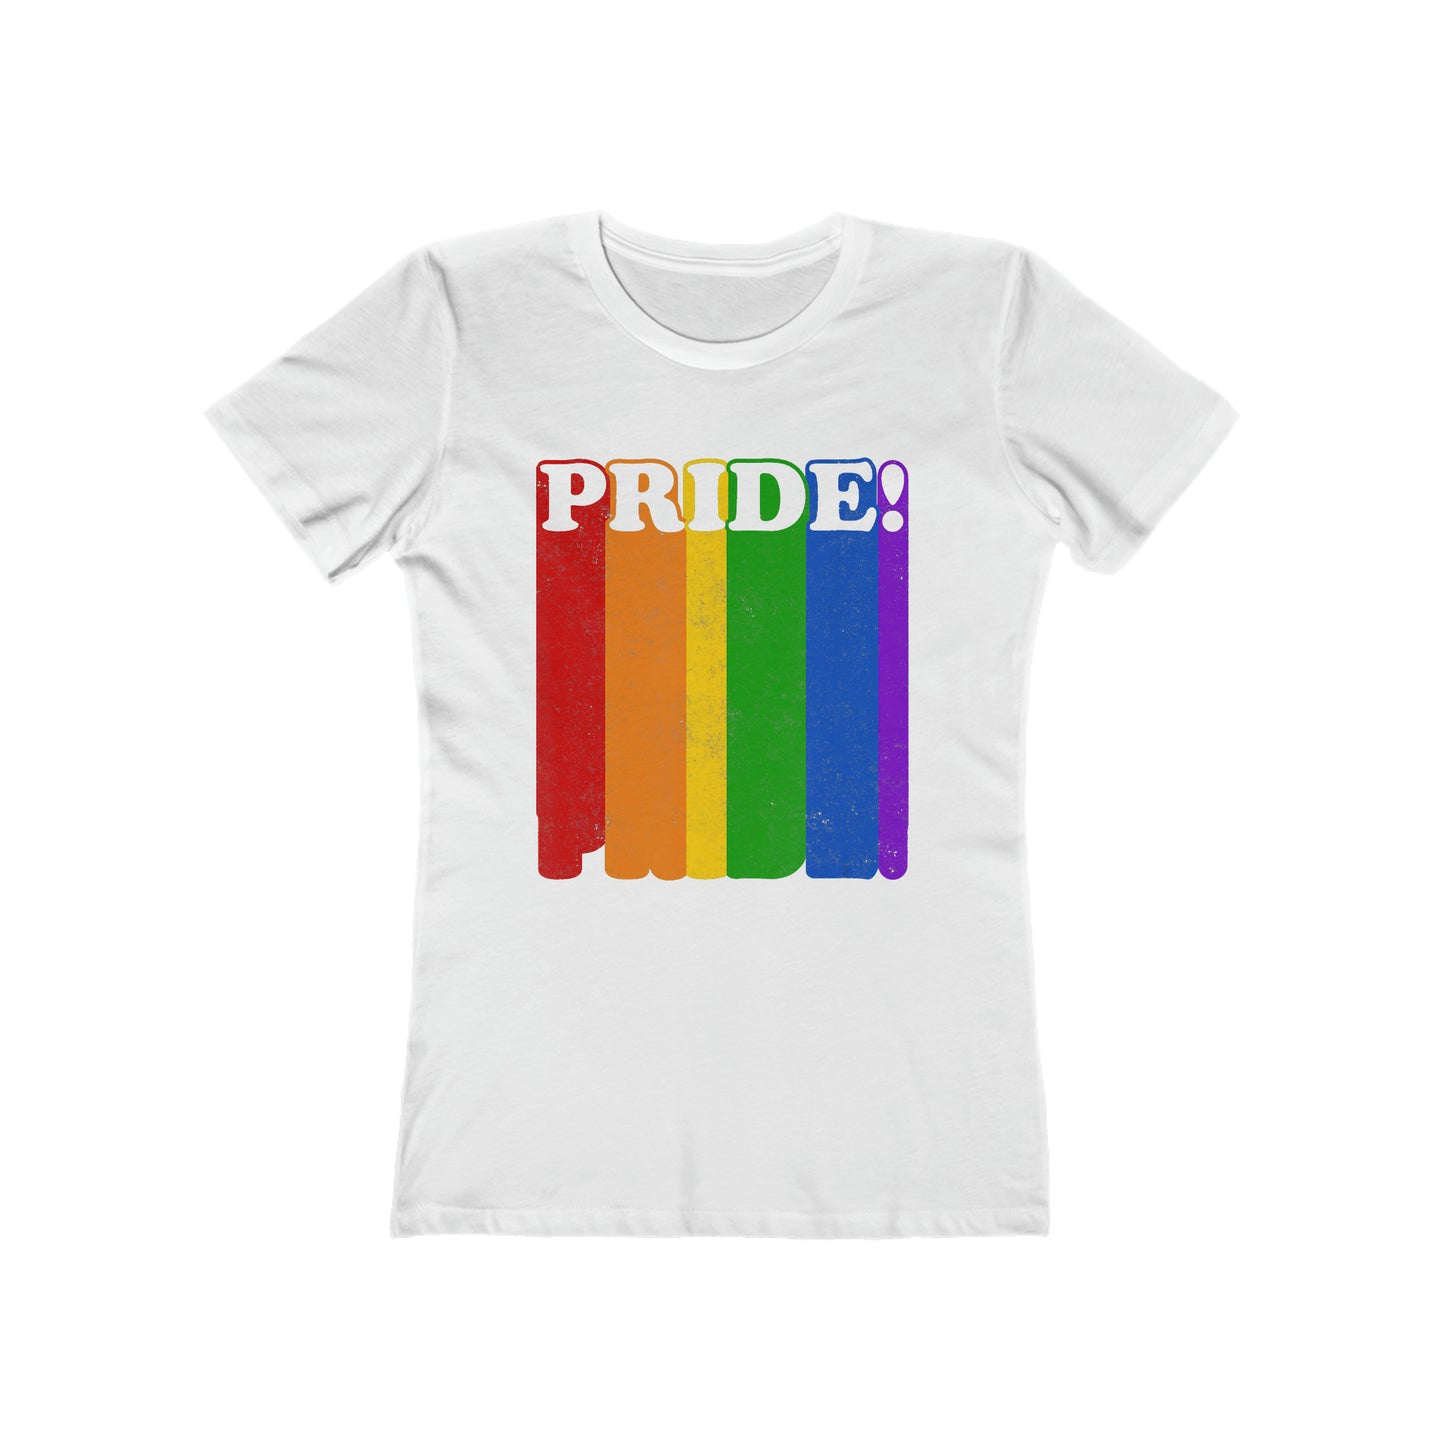 Pride 2 - Women's T-shirt